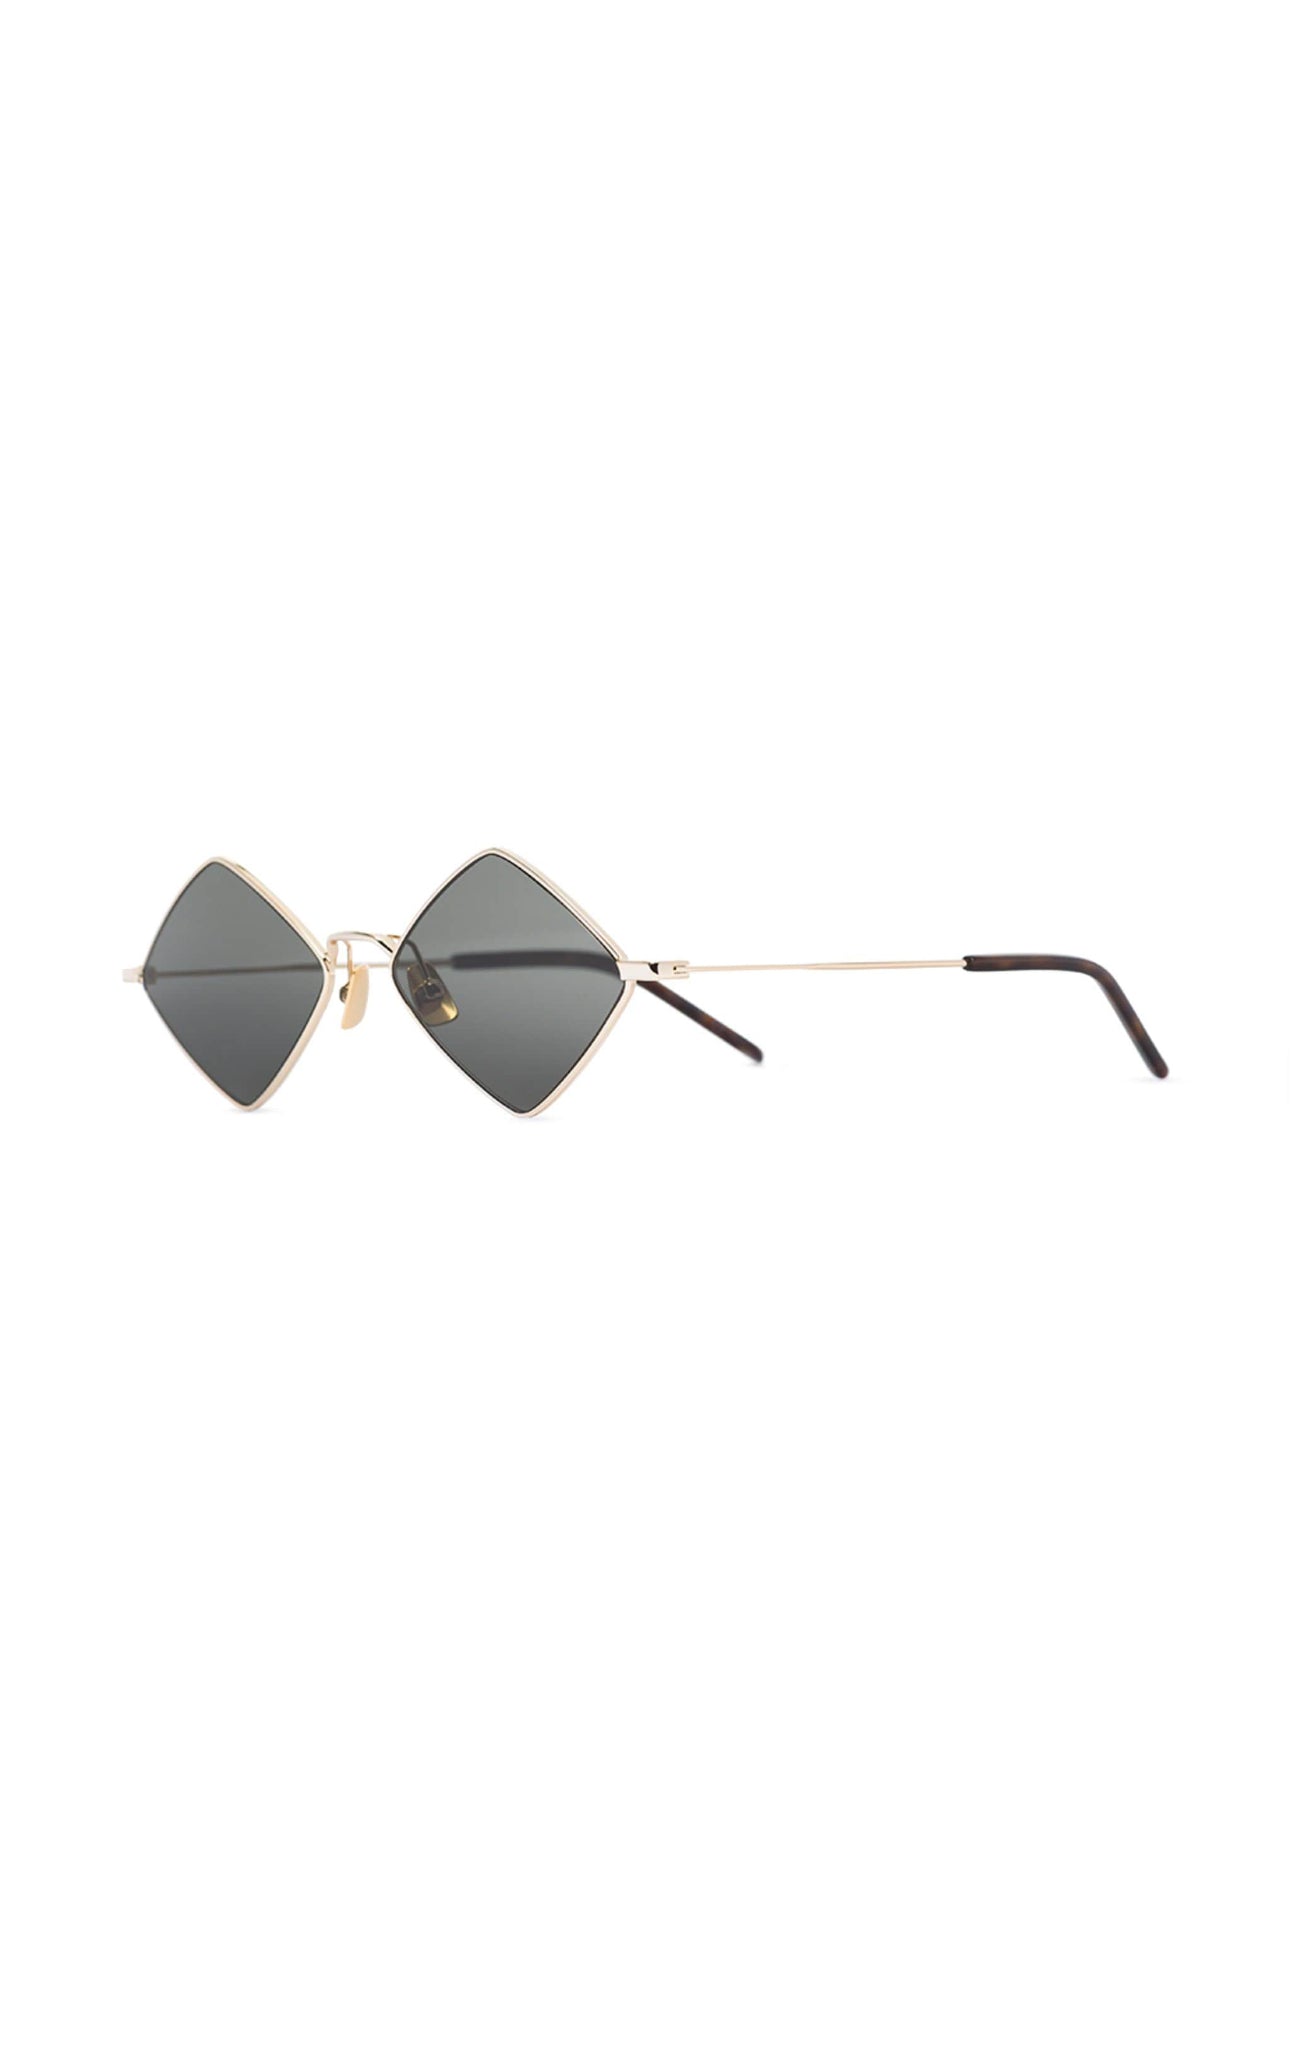 Saint Laurent sunglasses rental